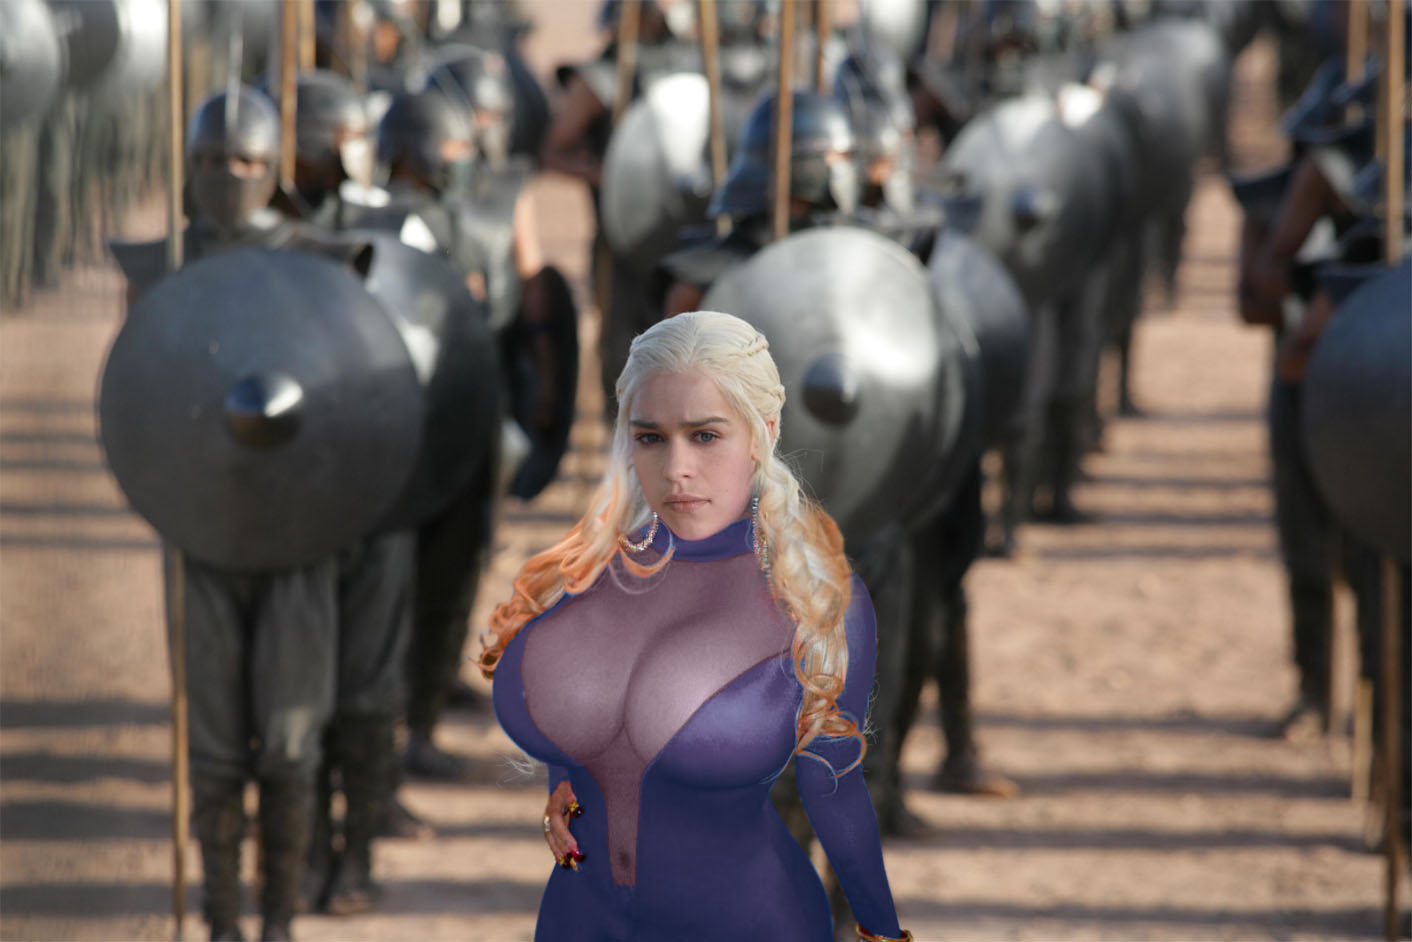 Game Of Thrones Big Tits - Game of Thrones ladies got some huge boobs â€“ Big Boobs Celebrities